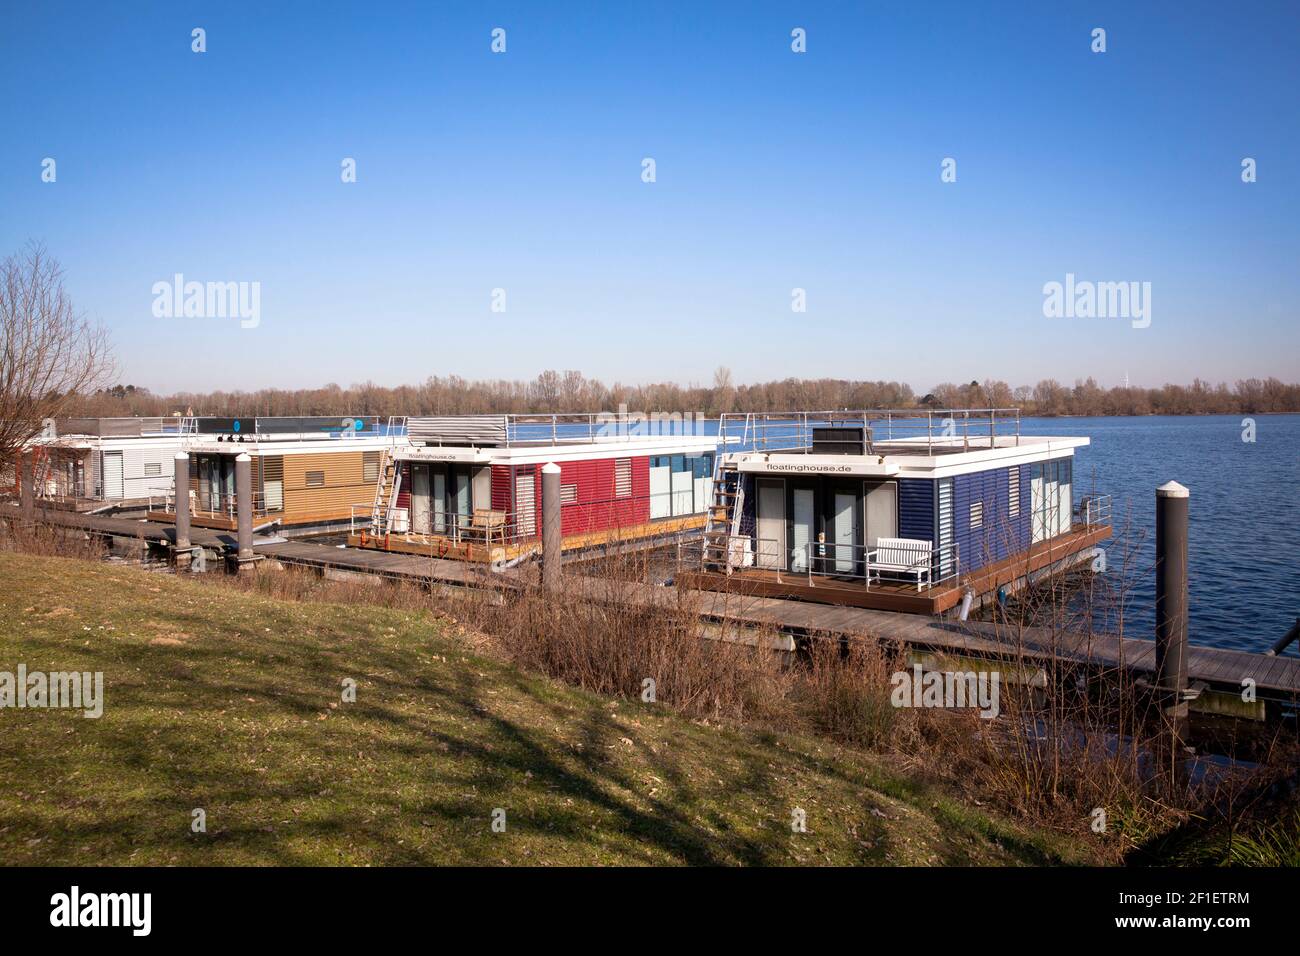 houseboats for rent in Vynen on the lake Xantener Nordsee, Xanten, North Rhine-Westphalia, Germany.  Hausboote zum mieten in Vynen an der Xantener Nor Stock Photo